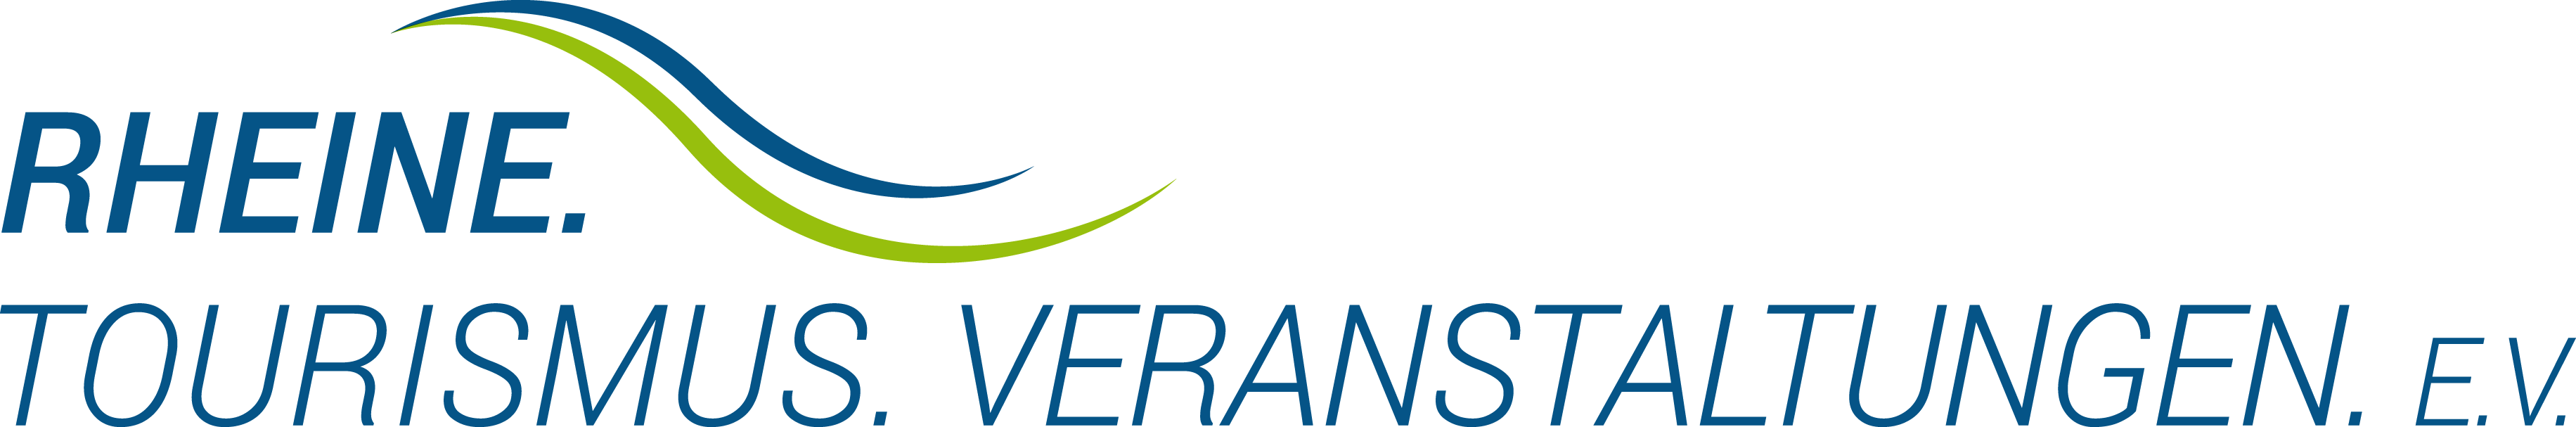 Verkehrsverein - Logo